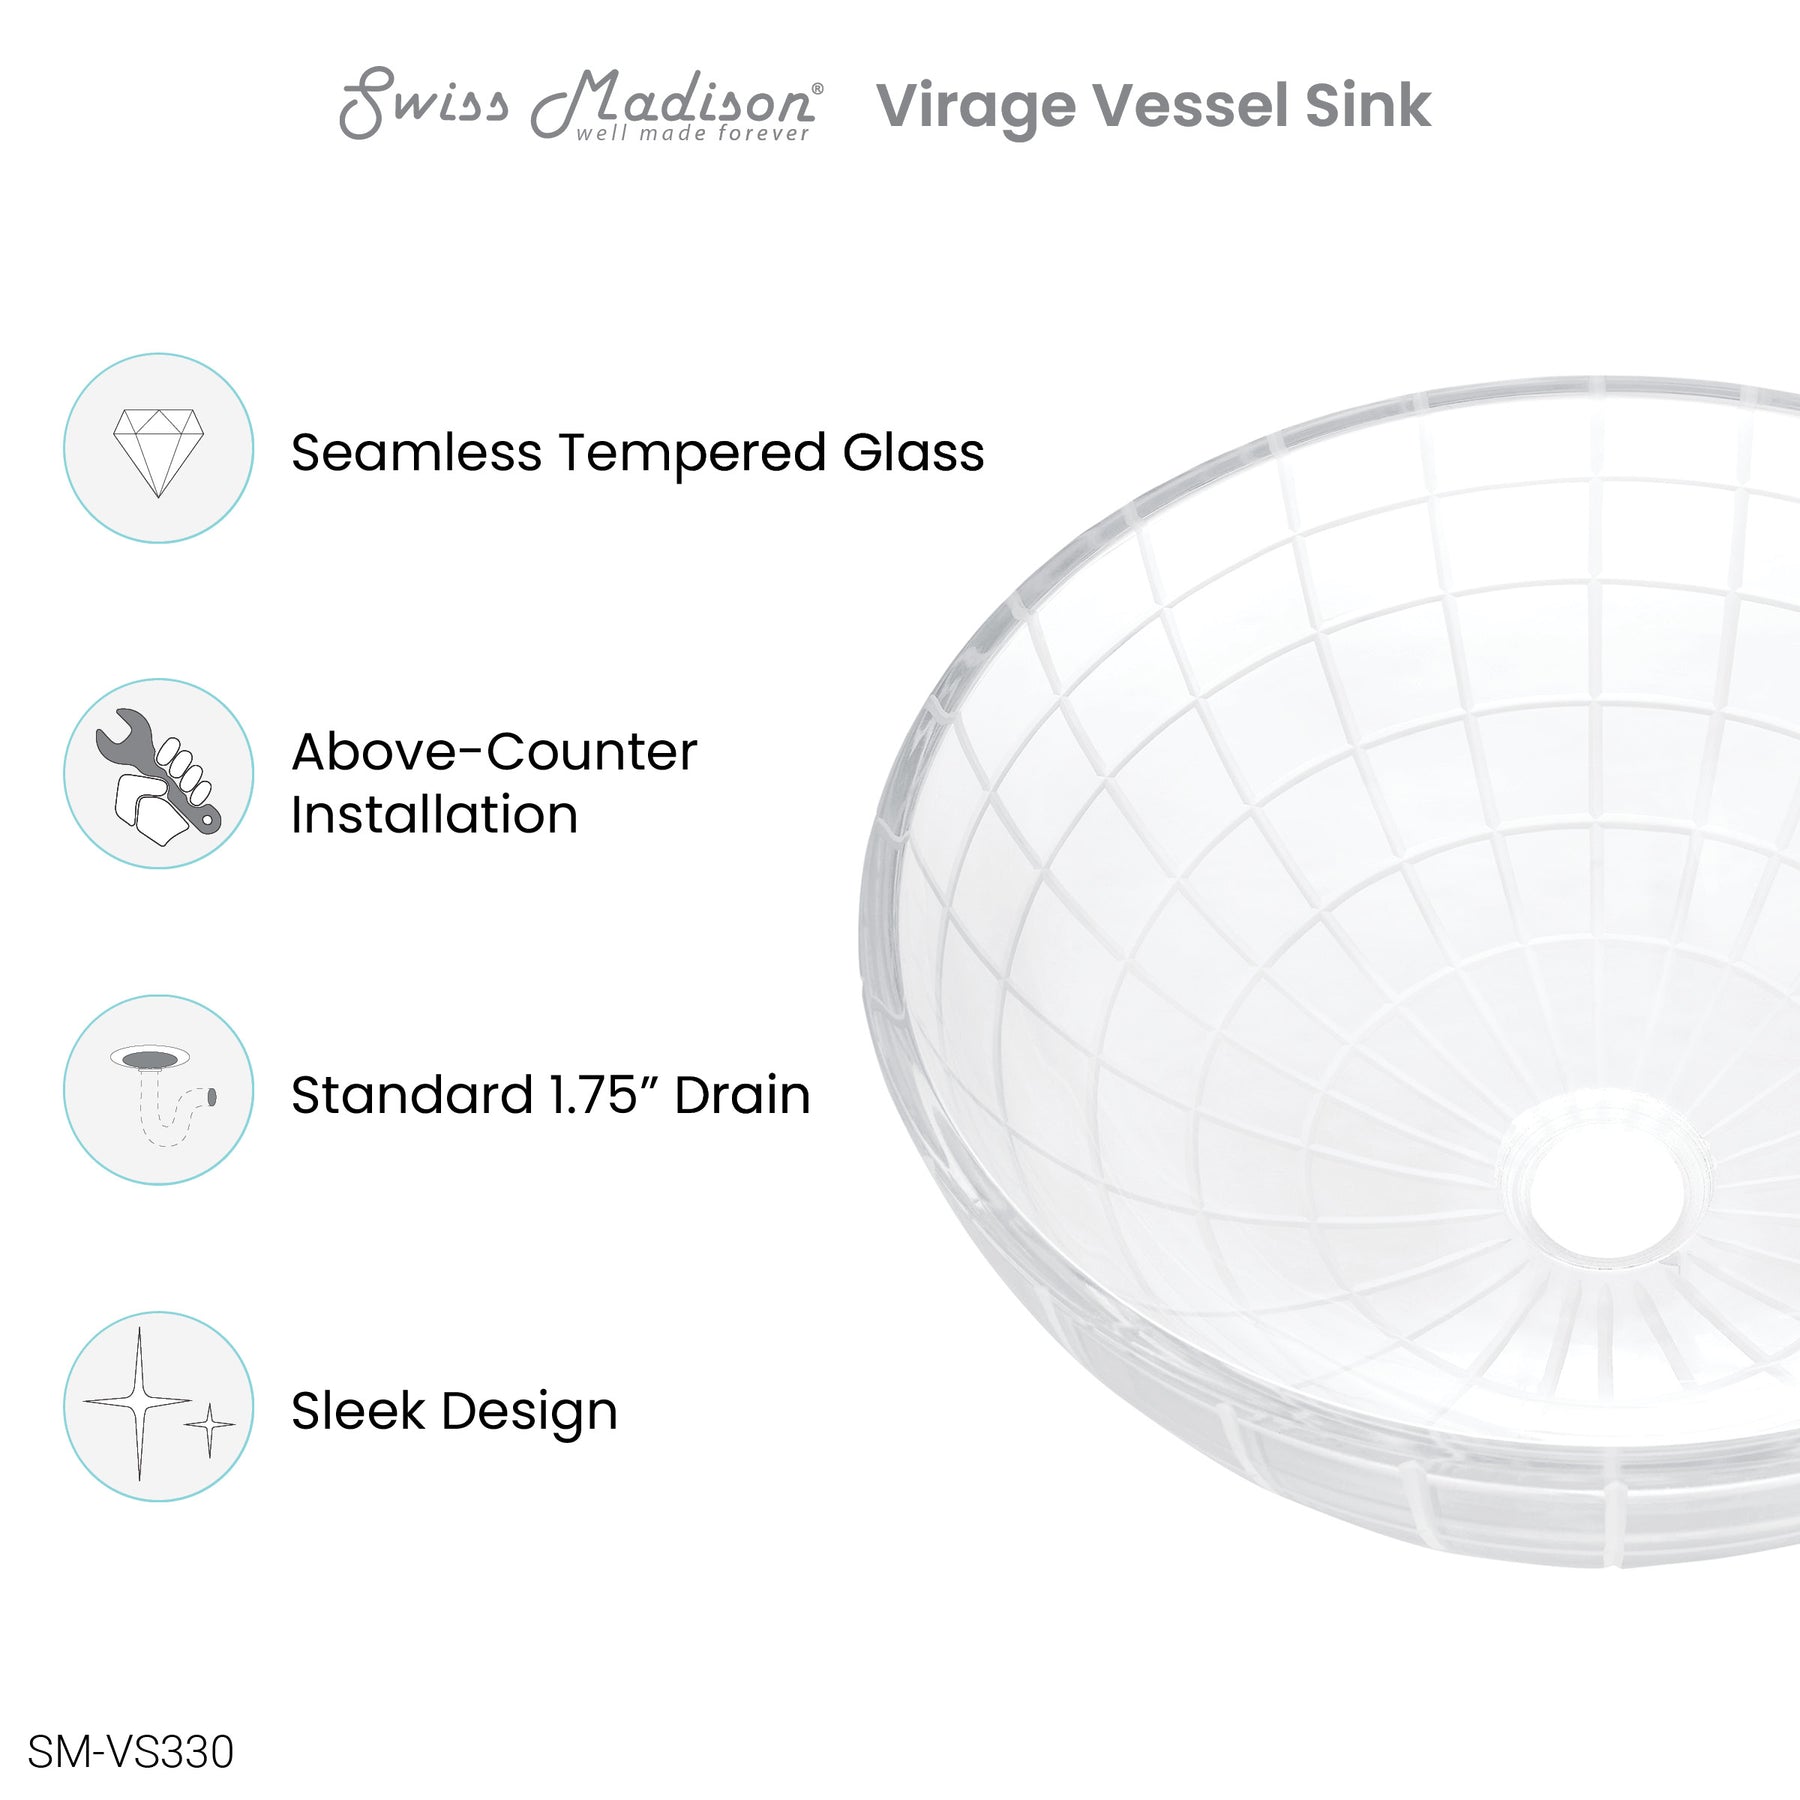 Swiss Madison Virage 16.5" Round Glass Vessel Sink - SM-VS330